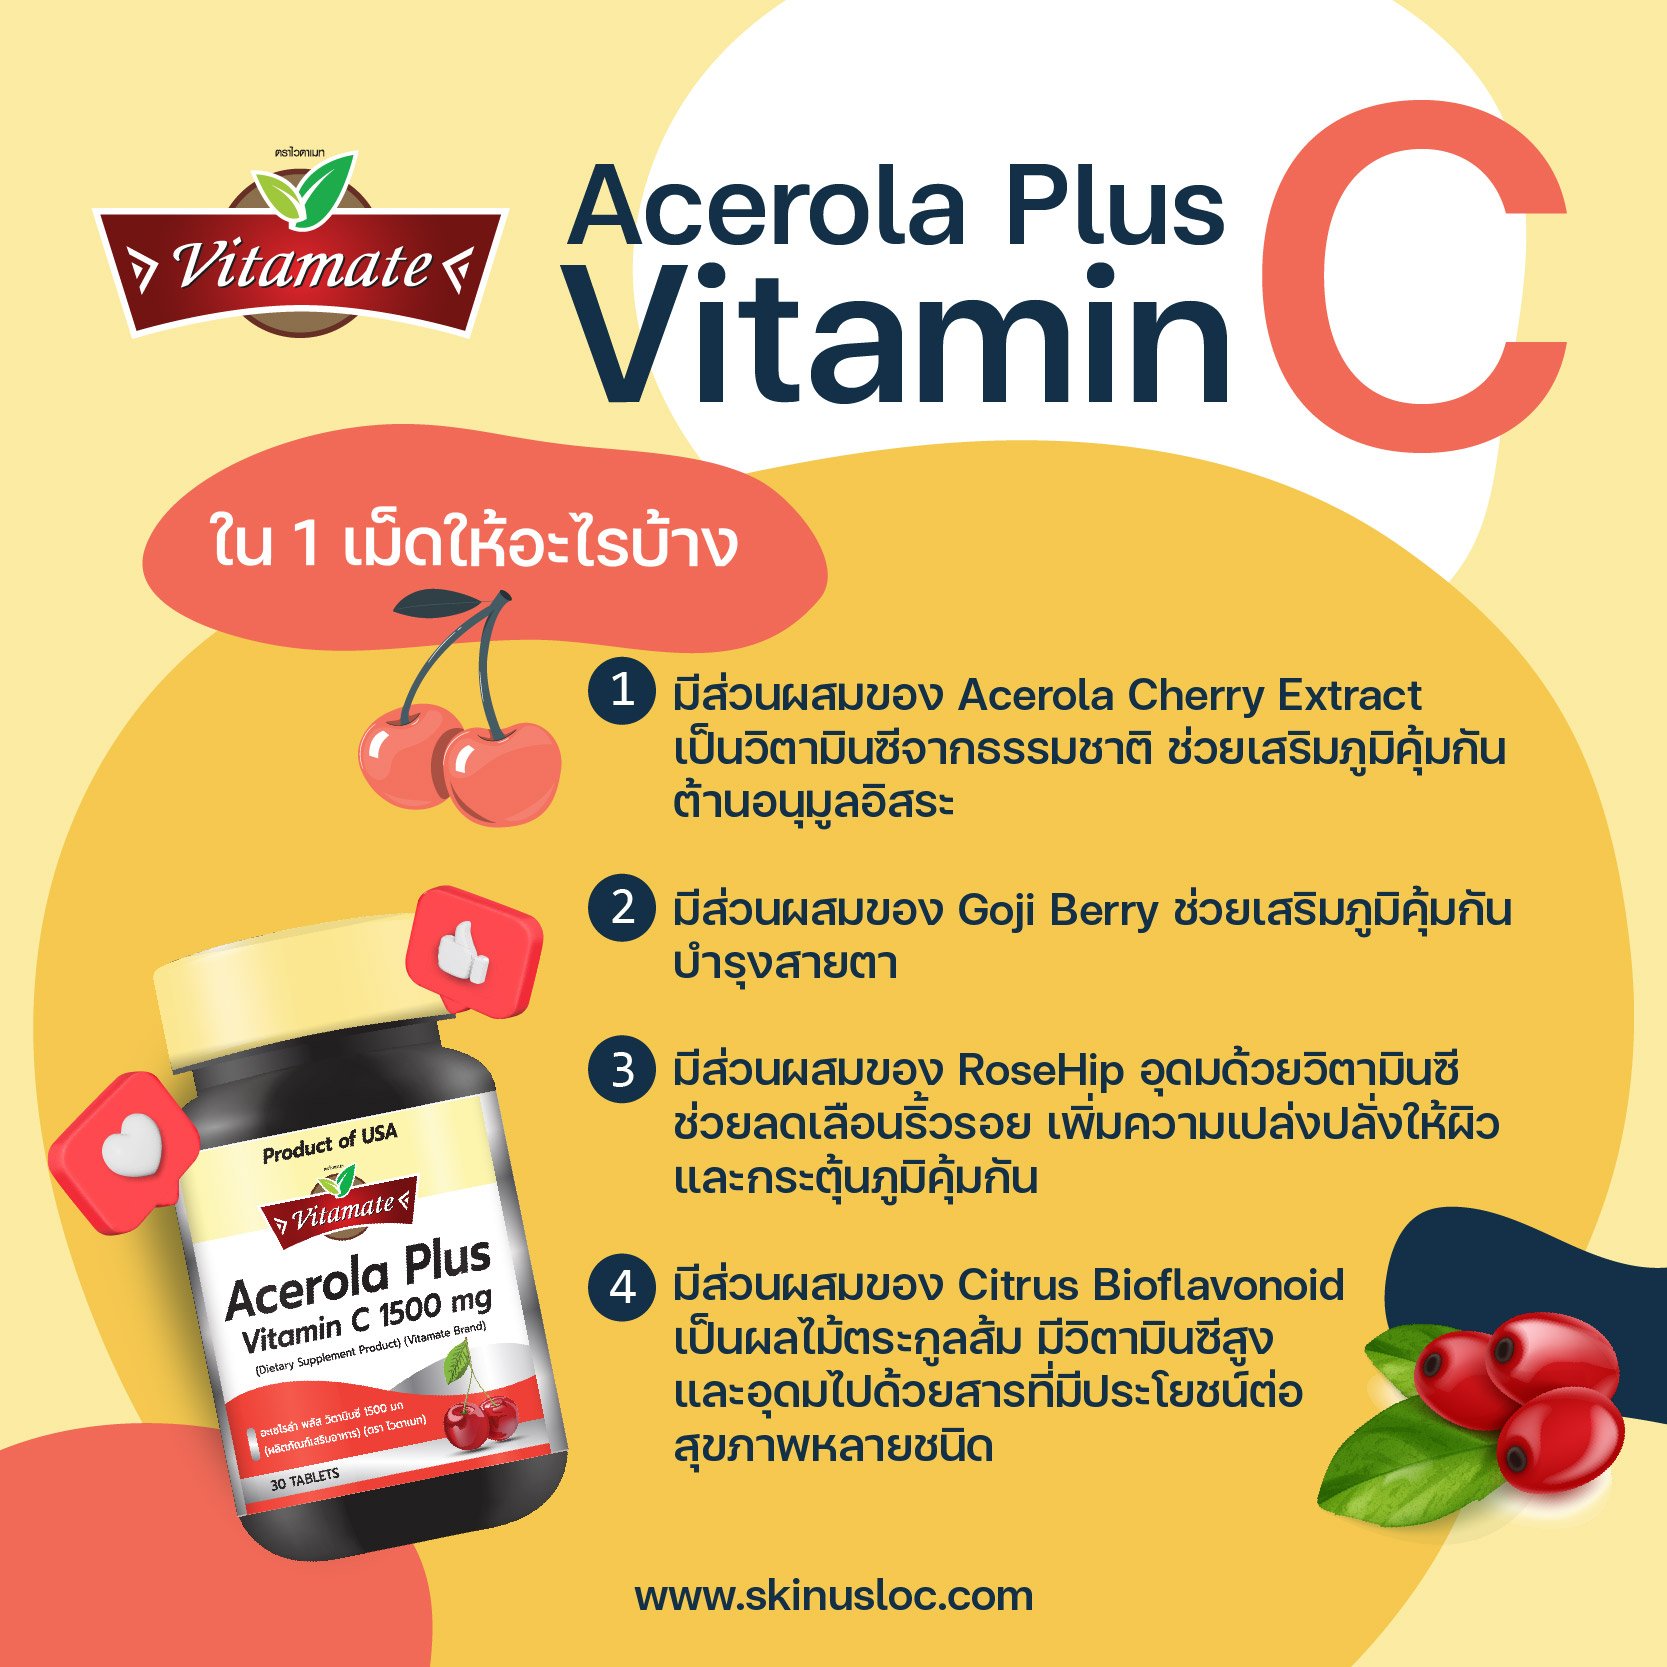 Vitamate Acerola Plus Vitamin C  ใน 1 เม็ดให้อะไรบ้าง